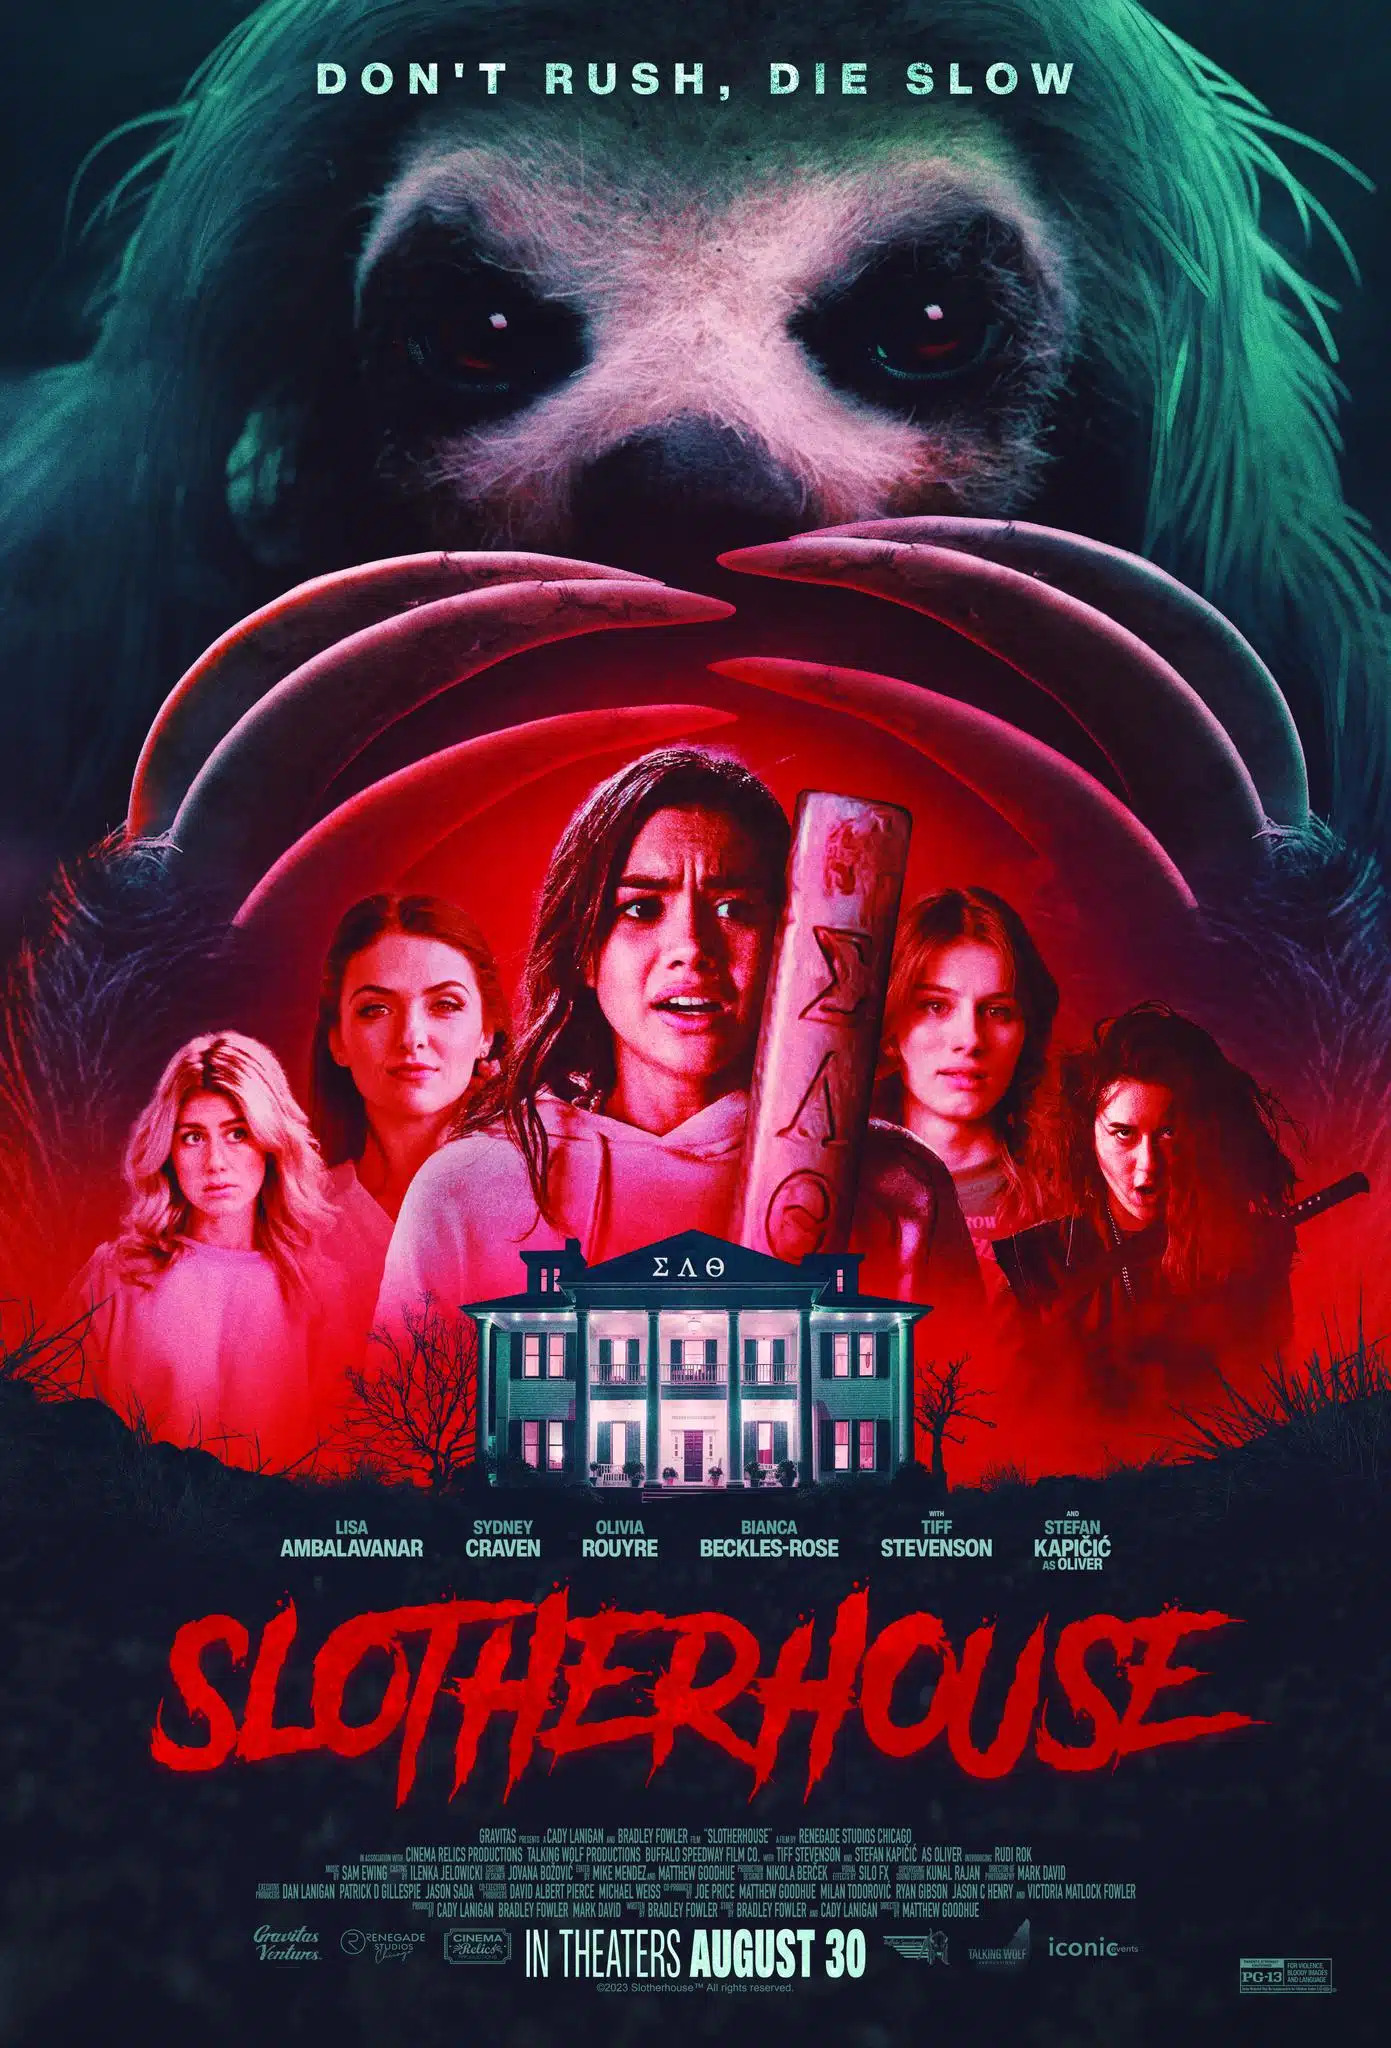 Slotherhouse Trailer & Poster